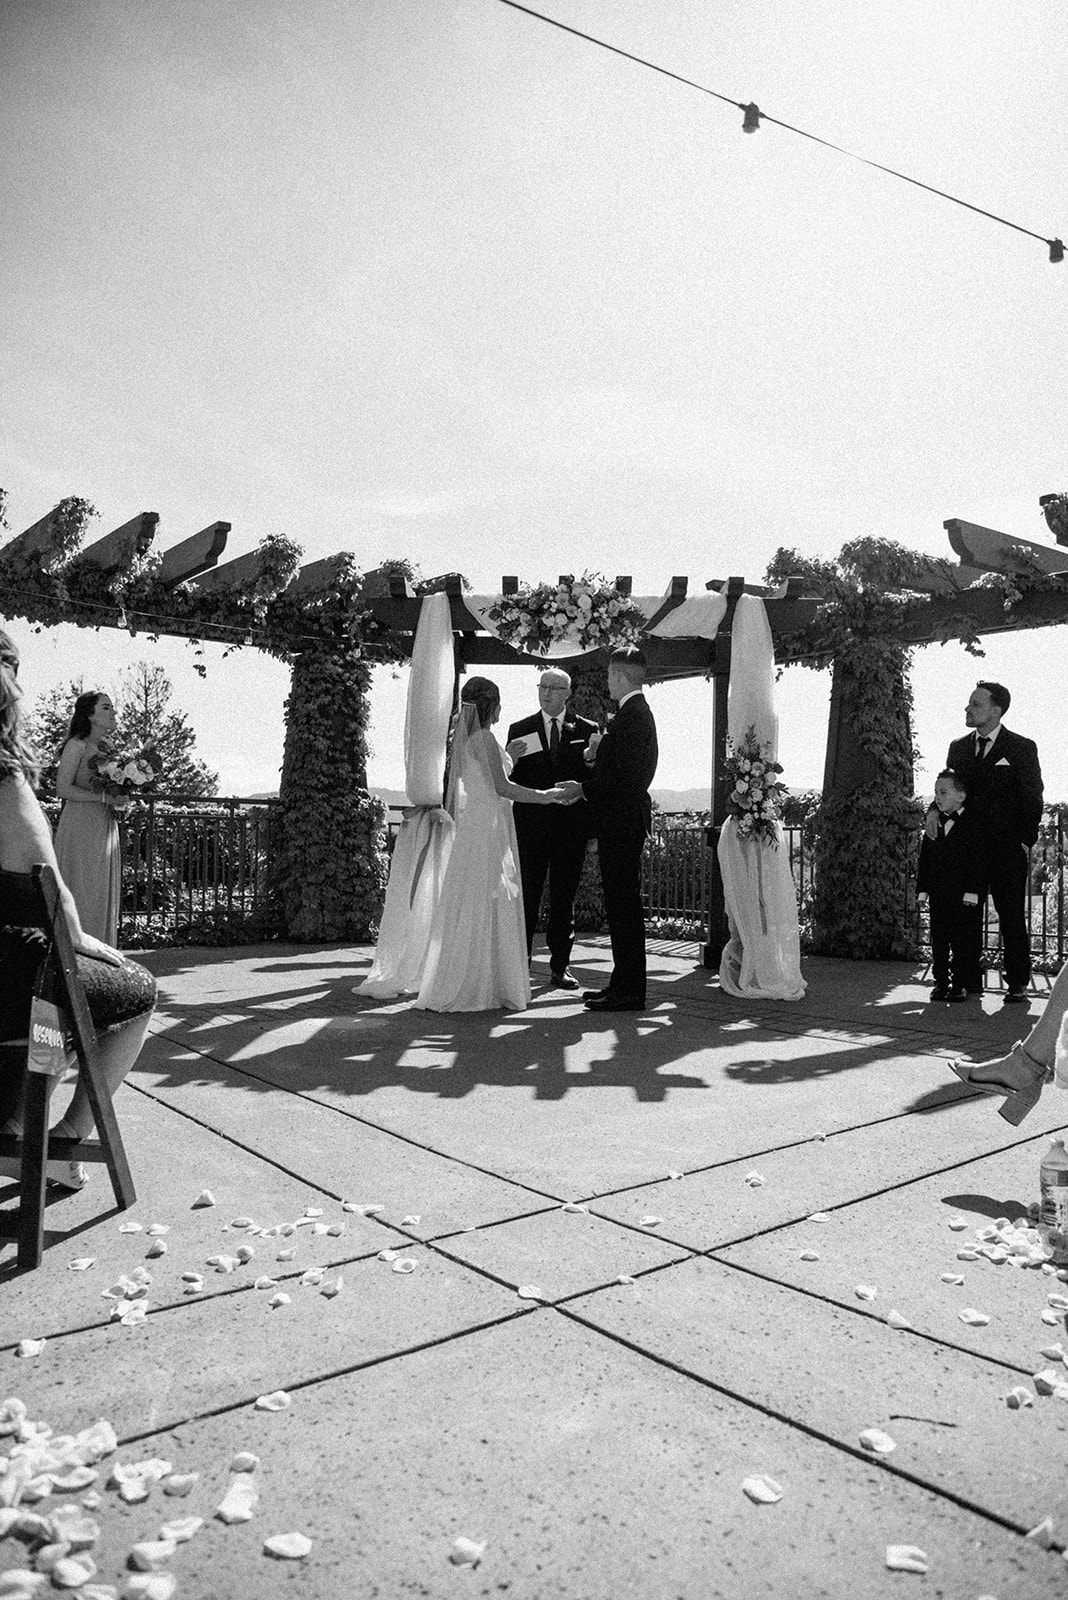 Sydney Jai Photography - Northern California wedding photographer, wedding ceremony, bride and groom photos